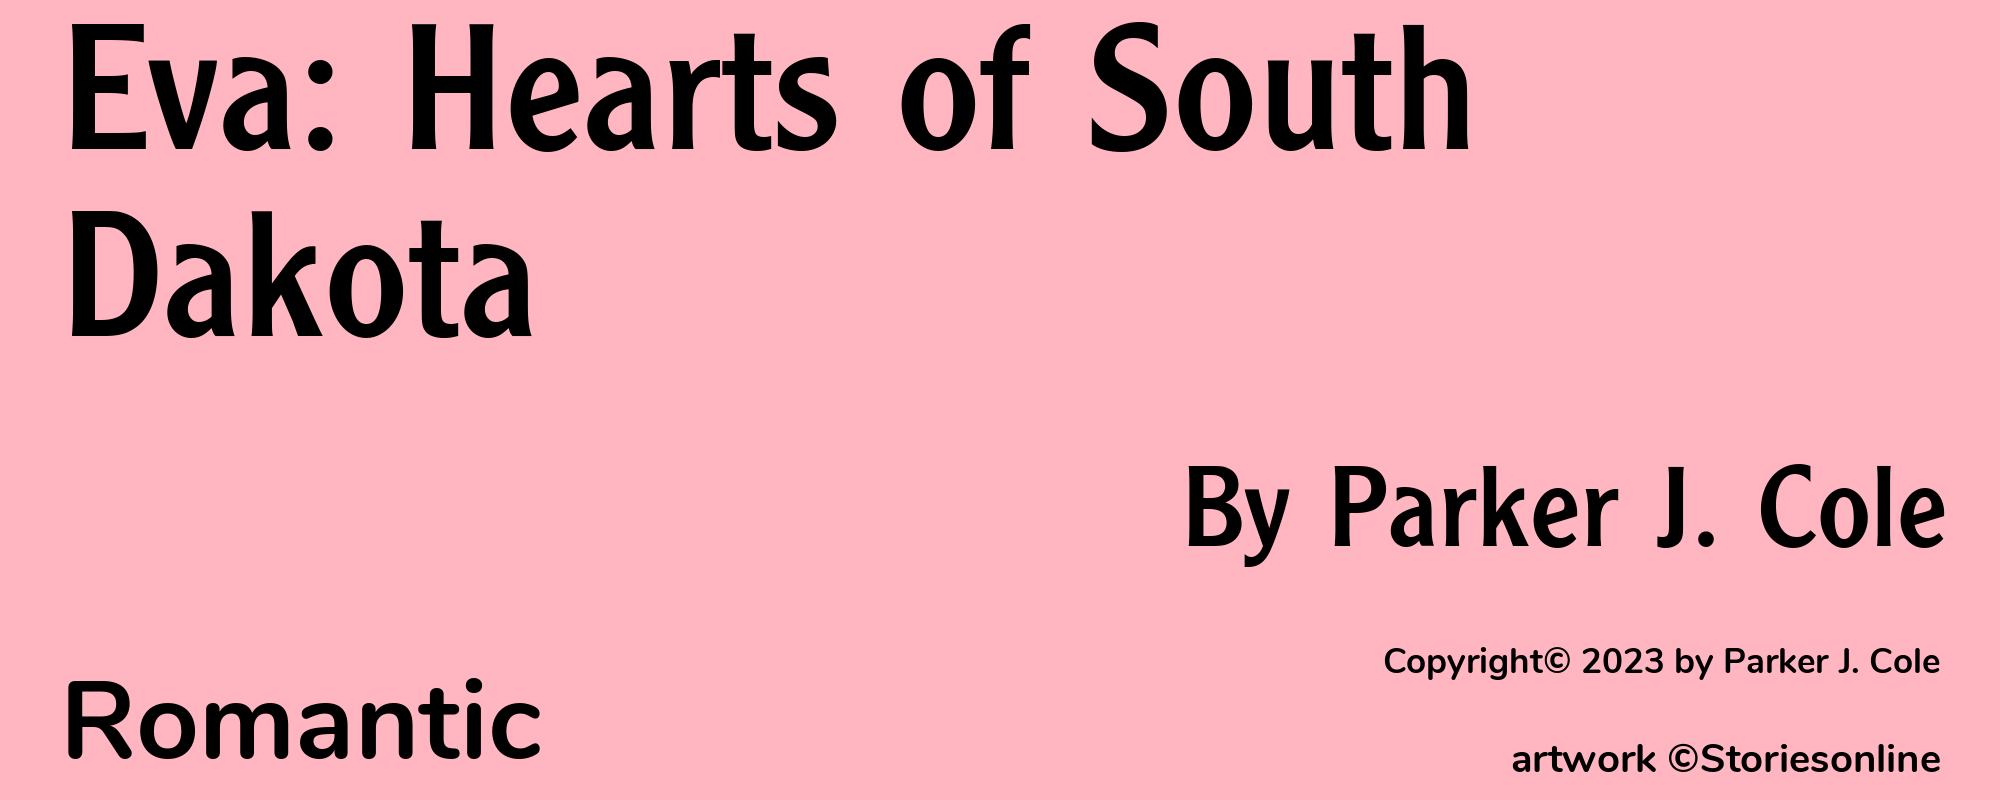 Eva: Hearts of South Dakota - Cover